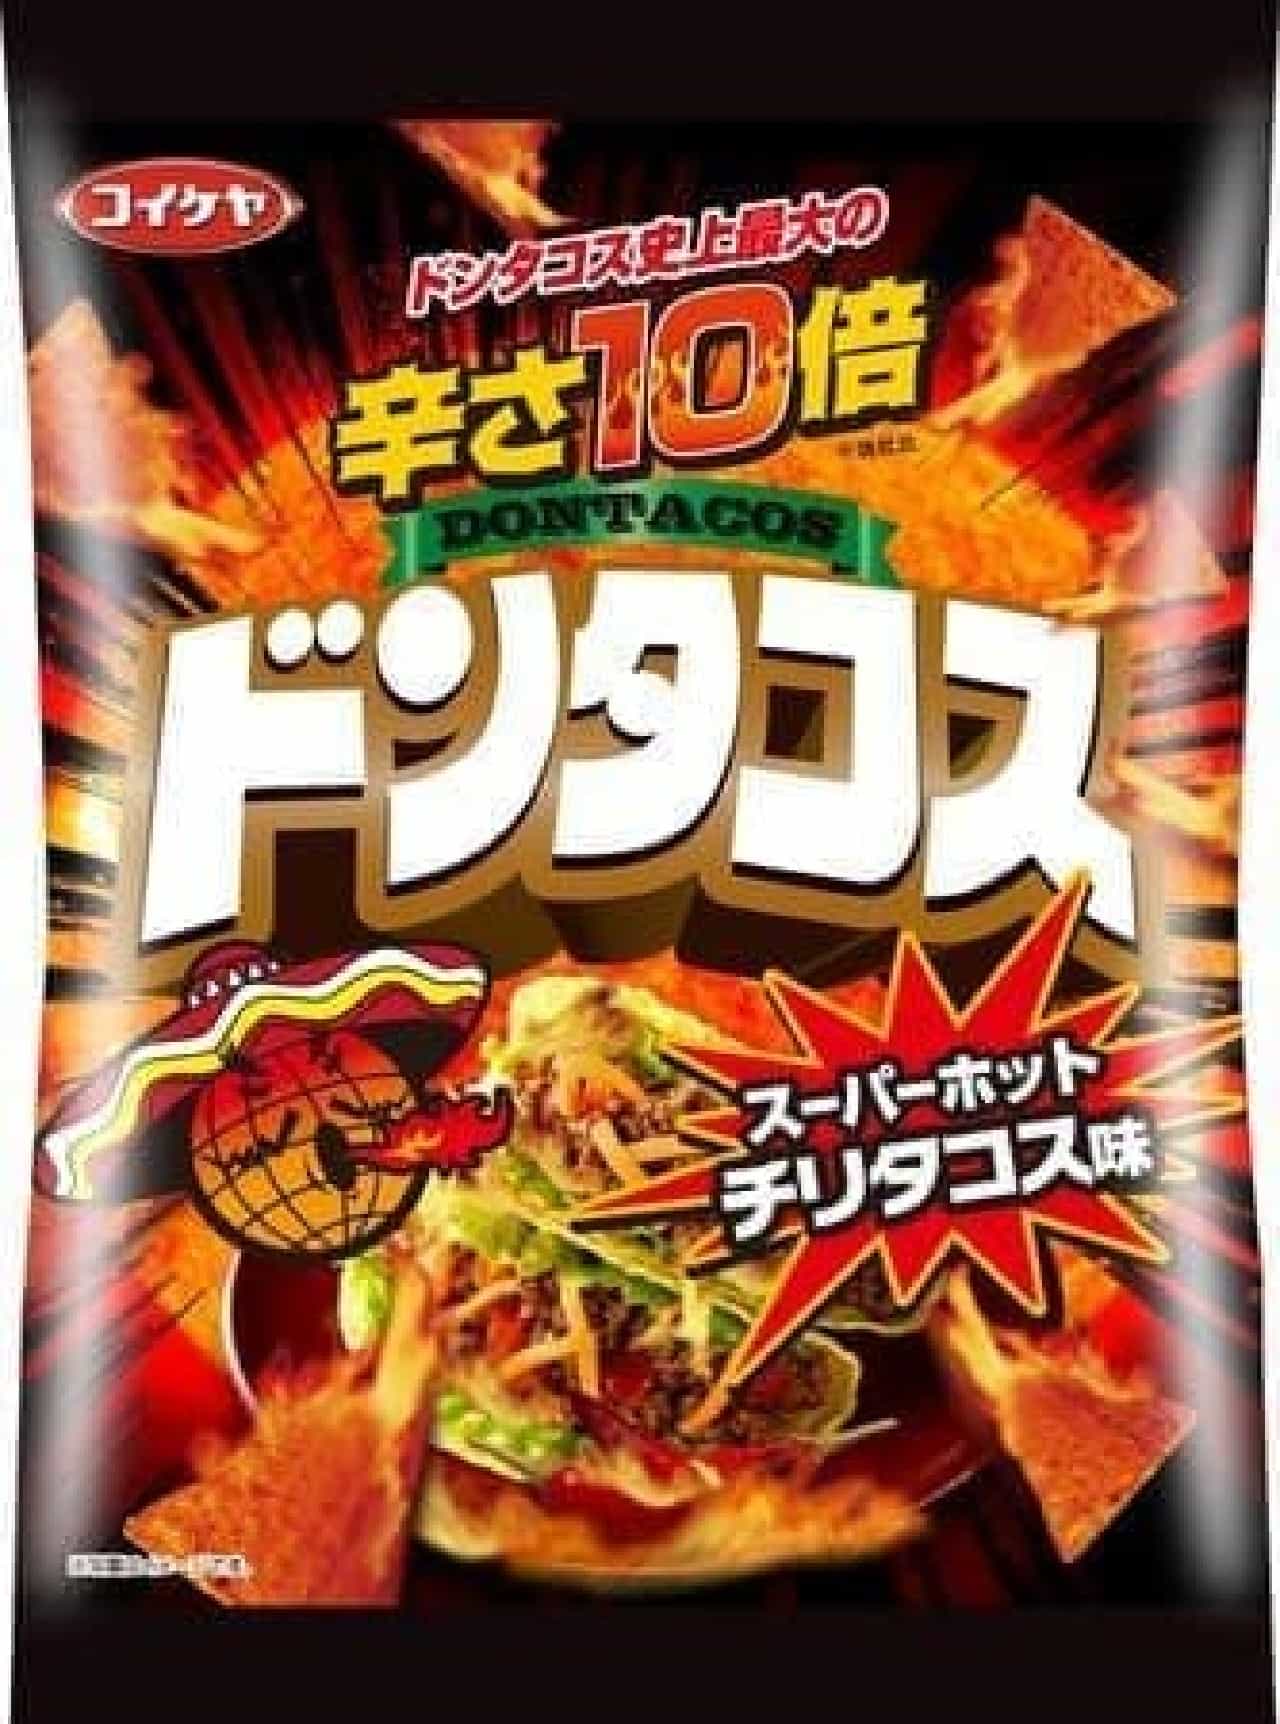 Koike-ya "Don Tacos Super Hot Chili Tacos Flavor"